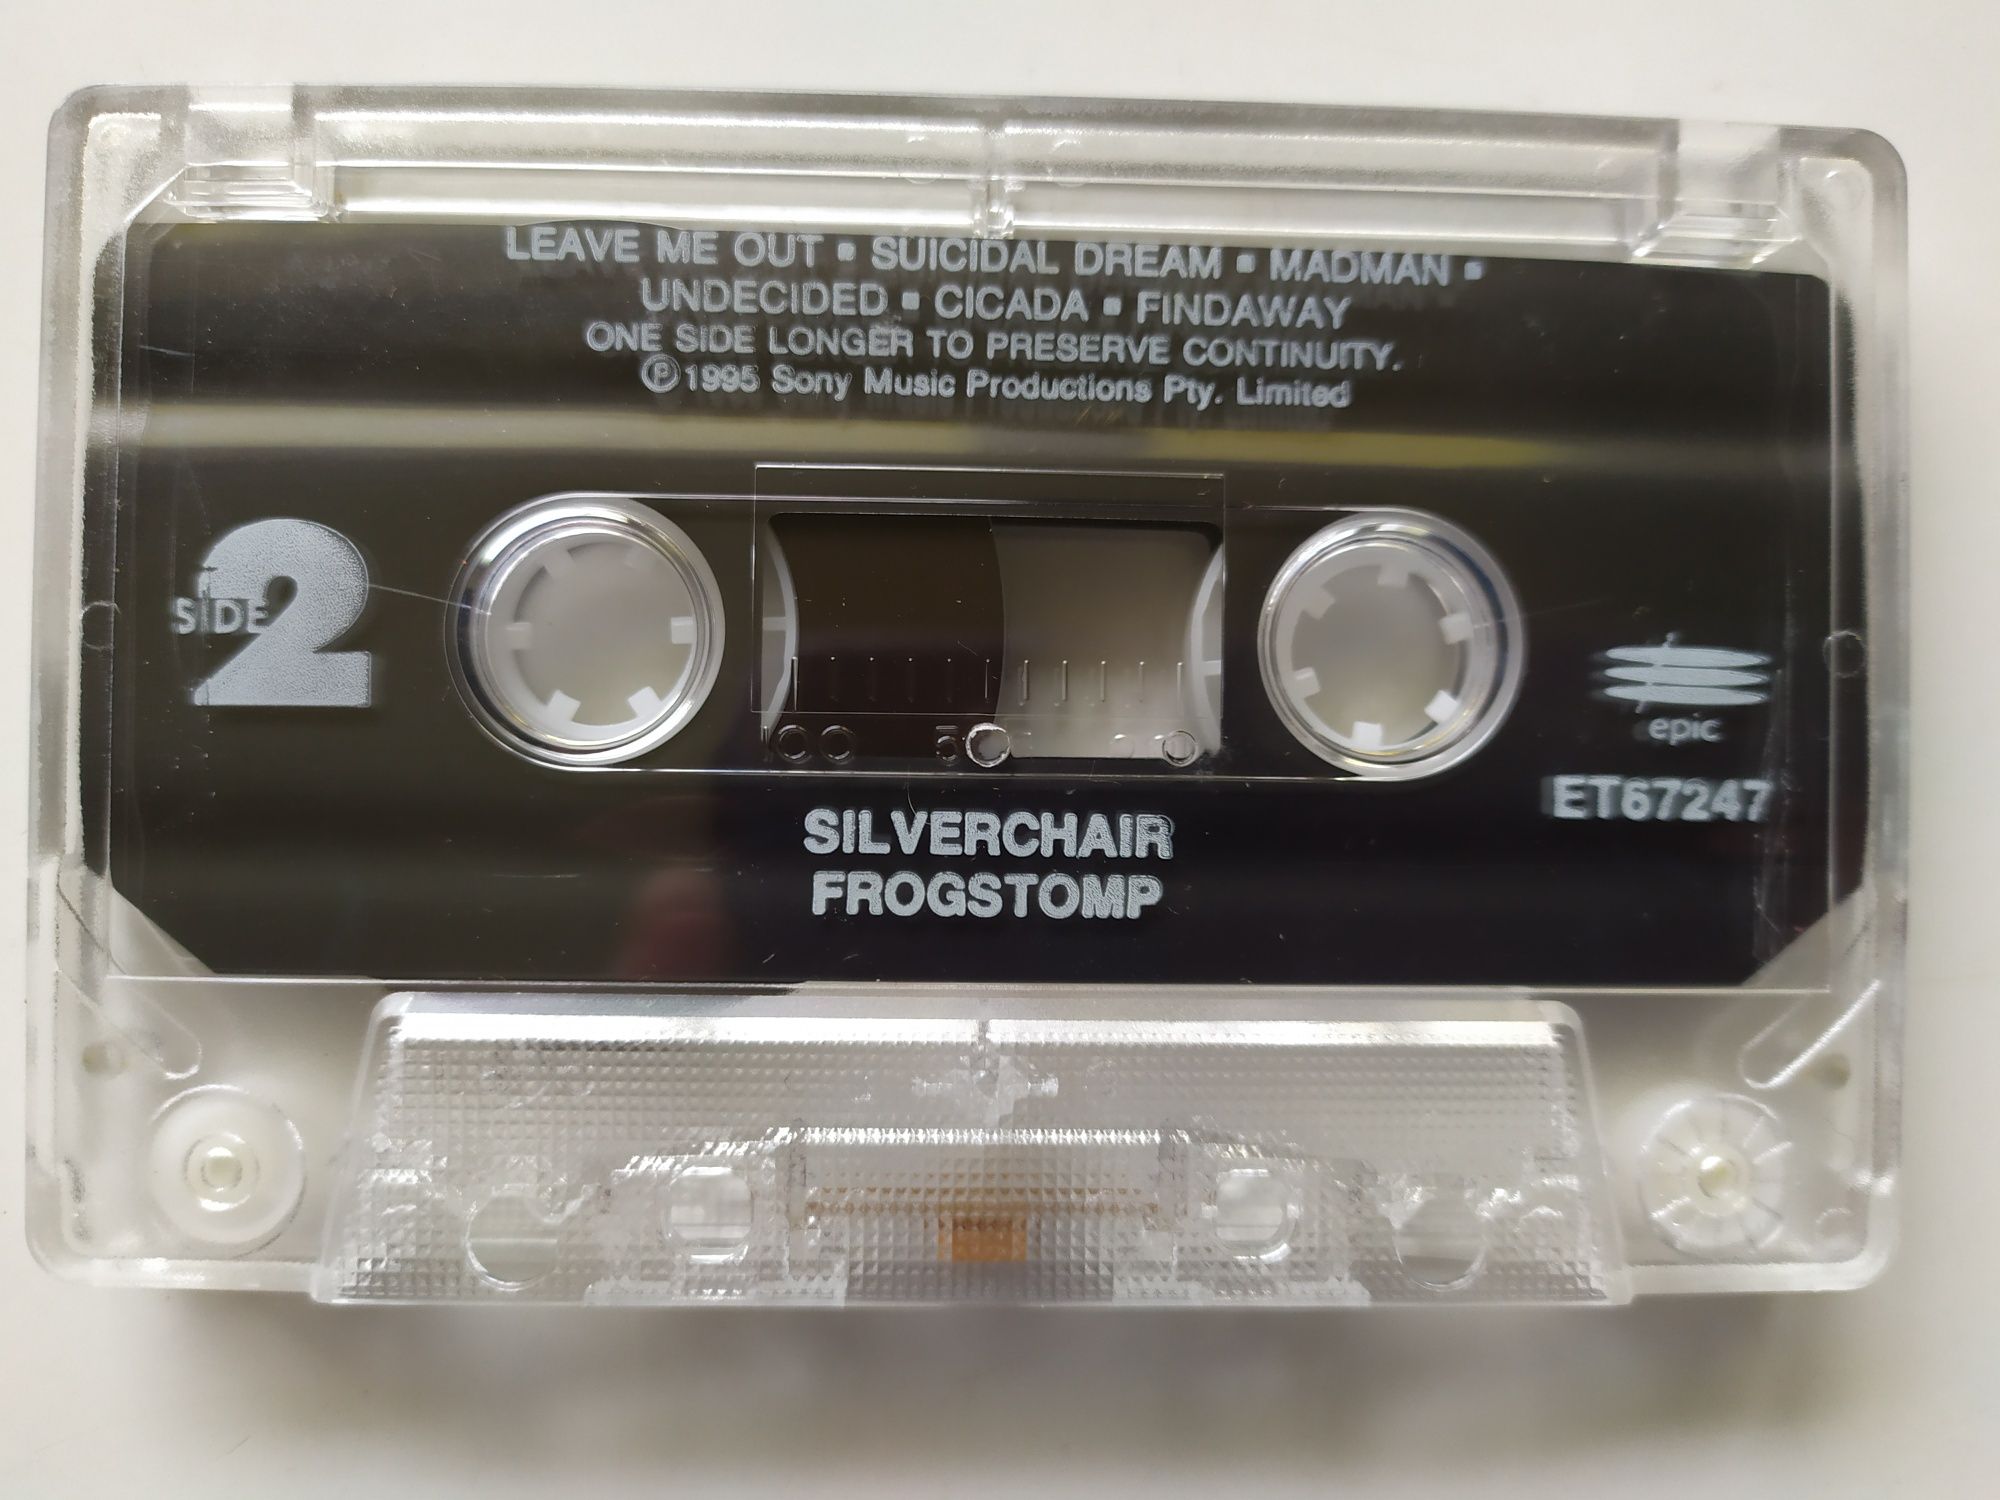 Silverchair Frogstomp касета США кассета Alice in chains soundgarden